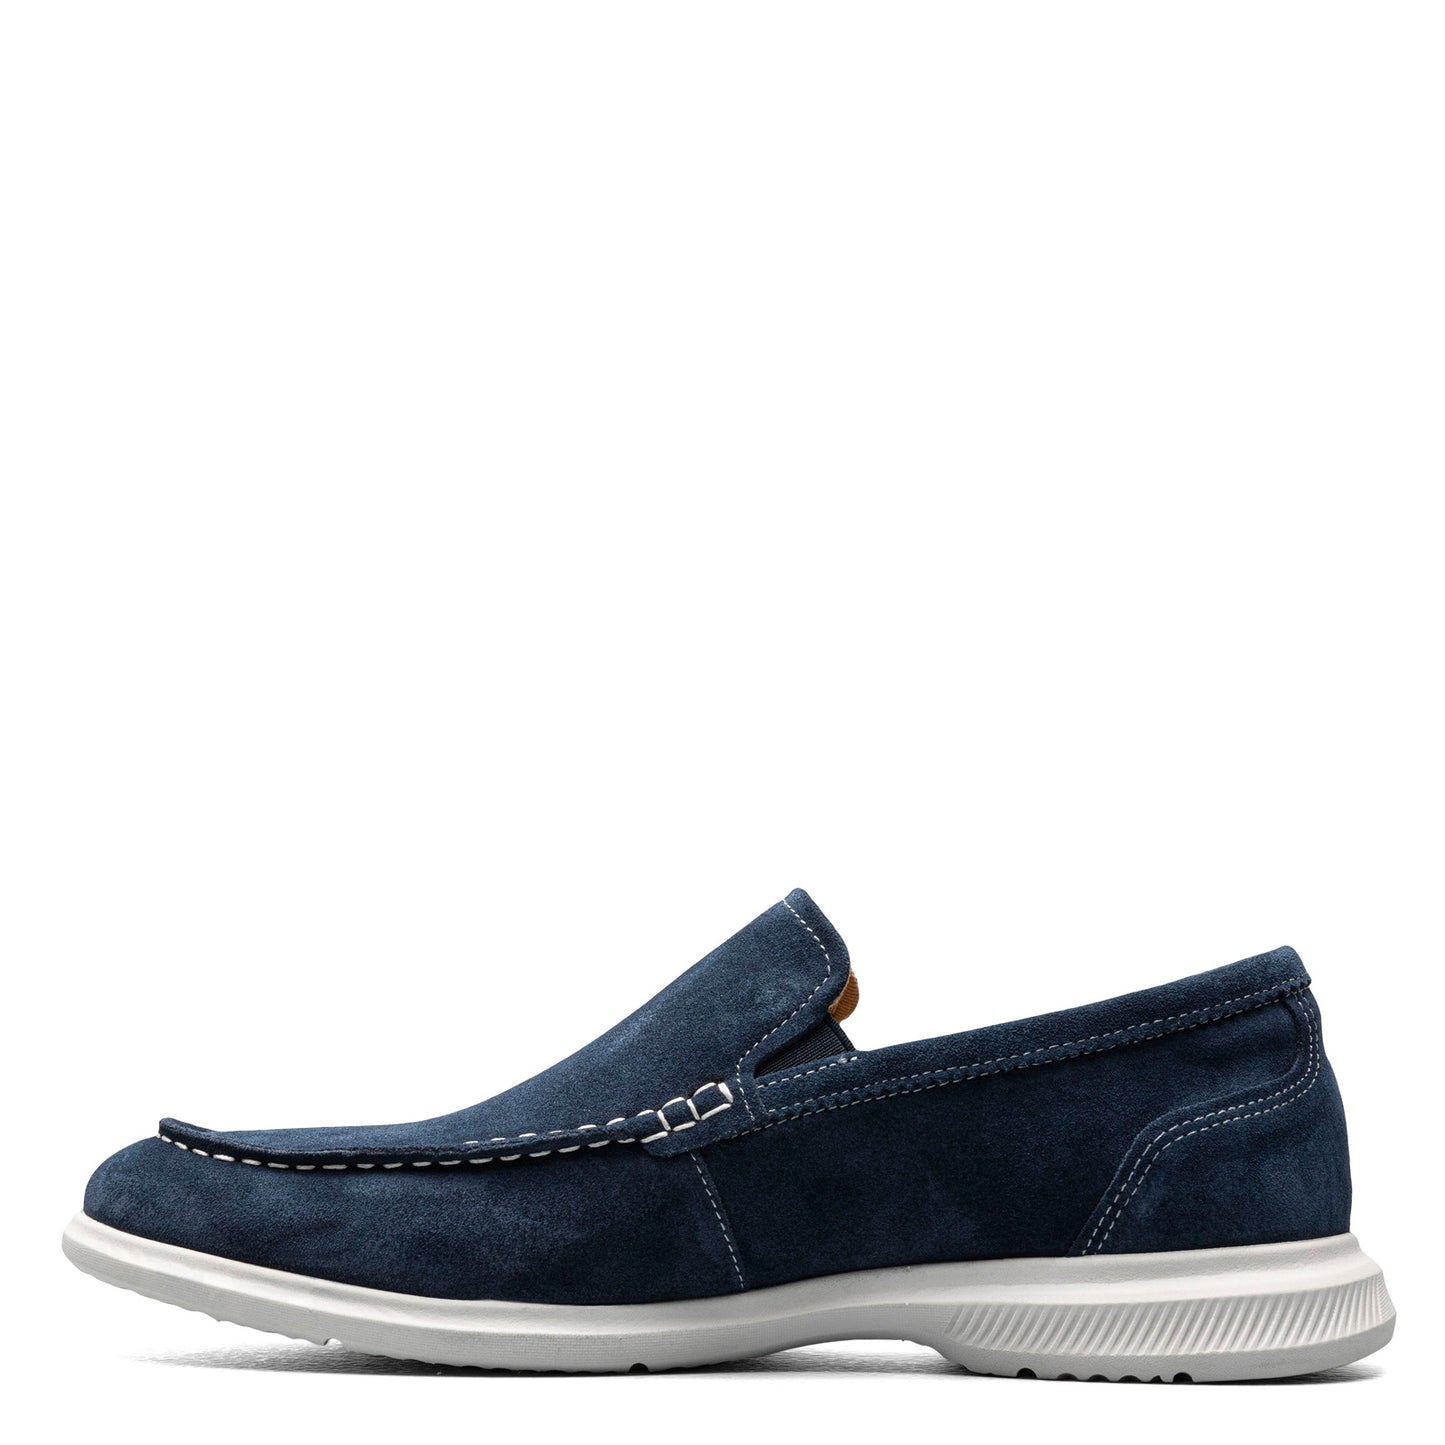 Peltz Shoes  Men's Florsheim Hamptons Moc Toe Venetian Loafer NAVY SUEDE 14397-415